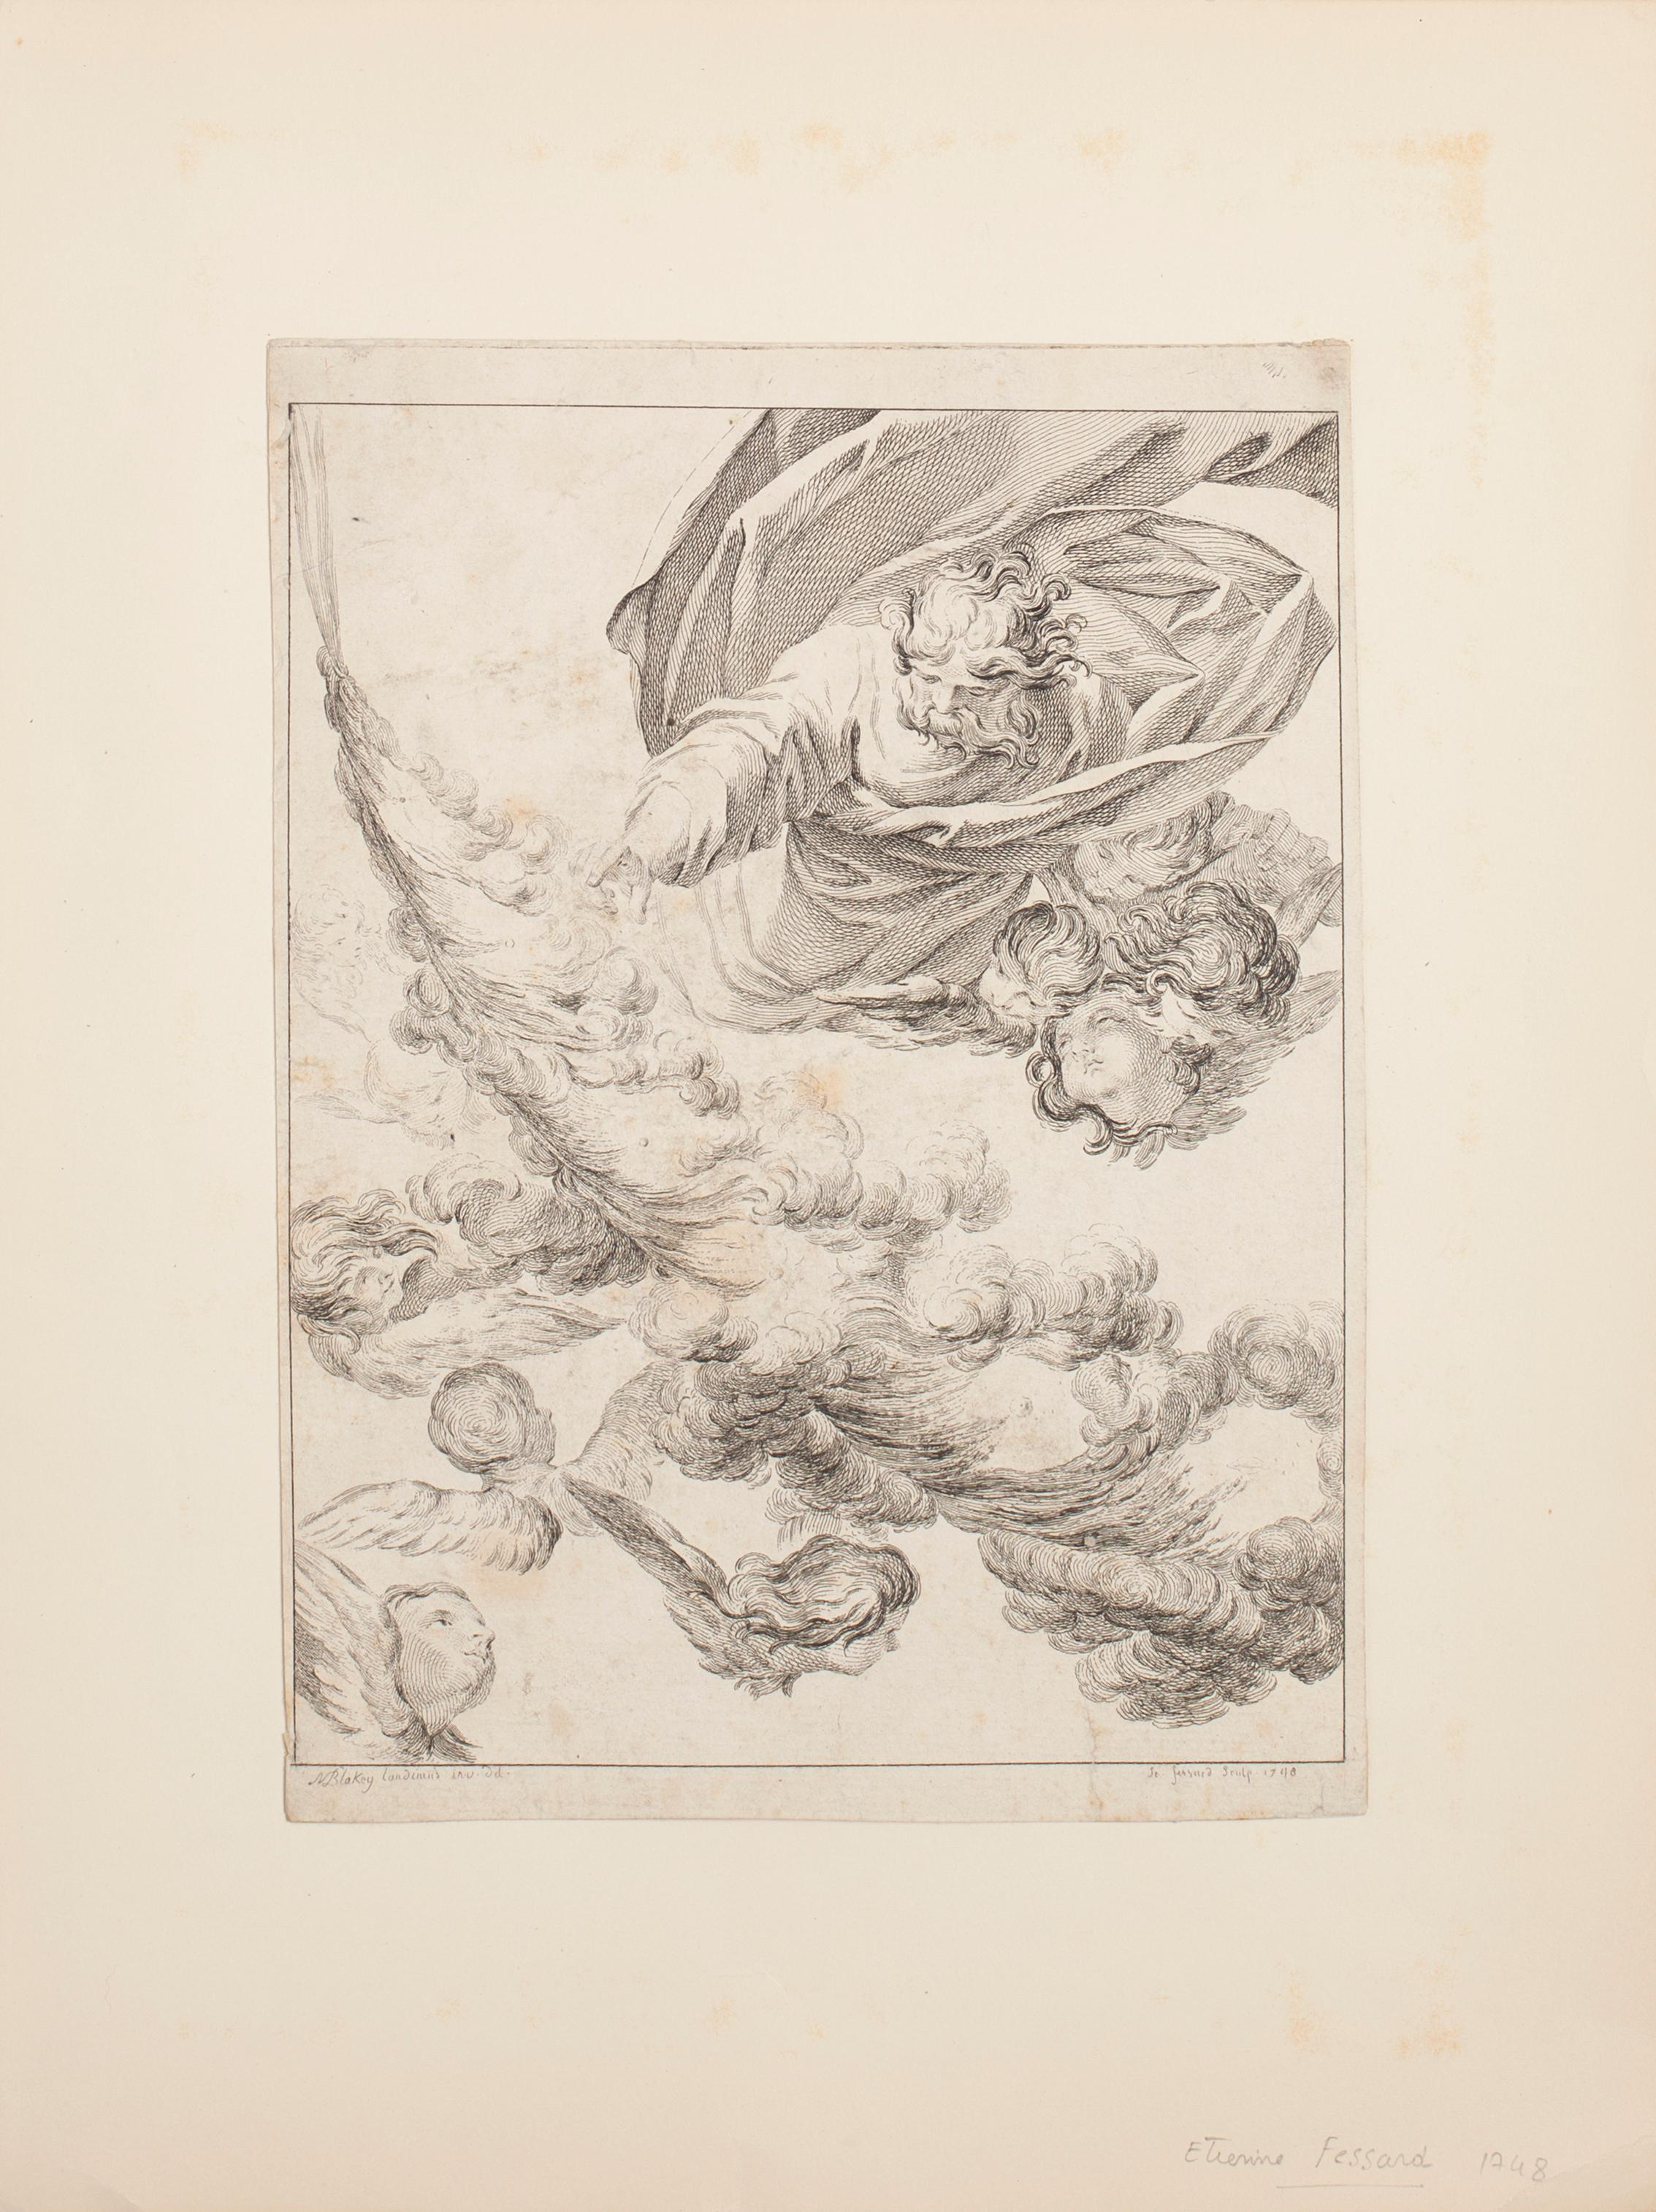 Angels - Original Etching by E. Fessard - 1748 - Print by Etienne Fessard